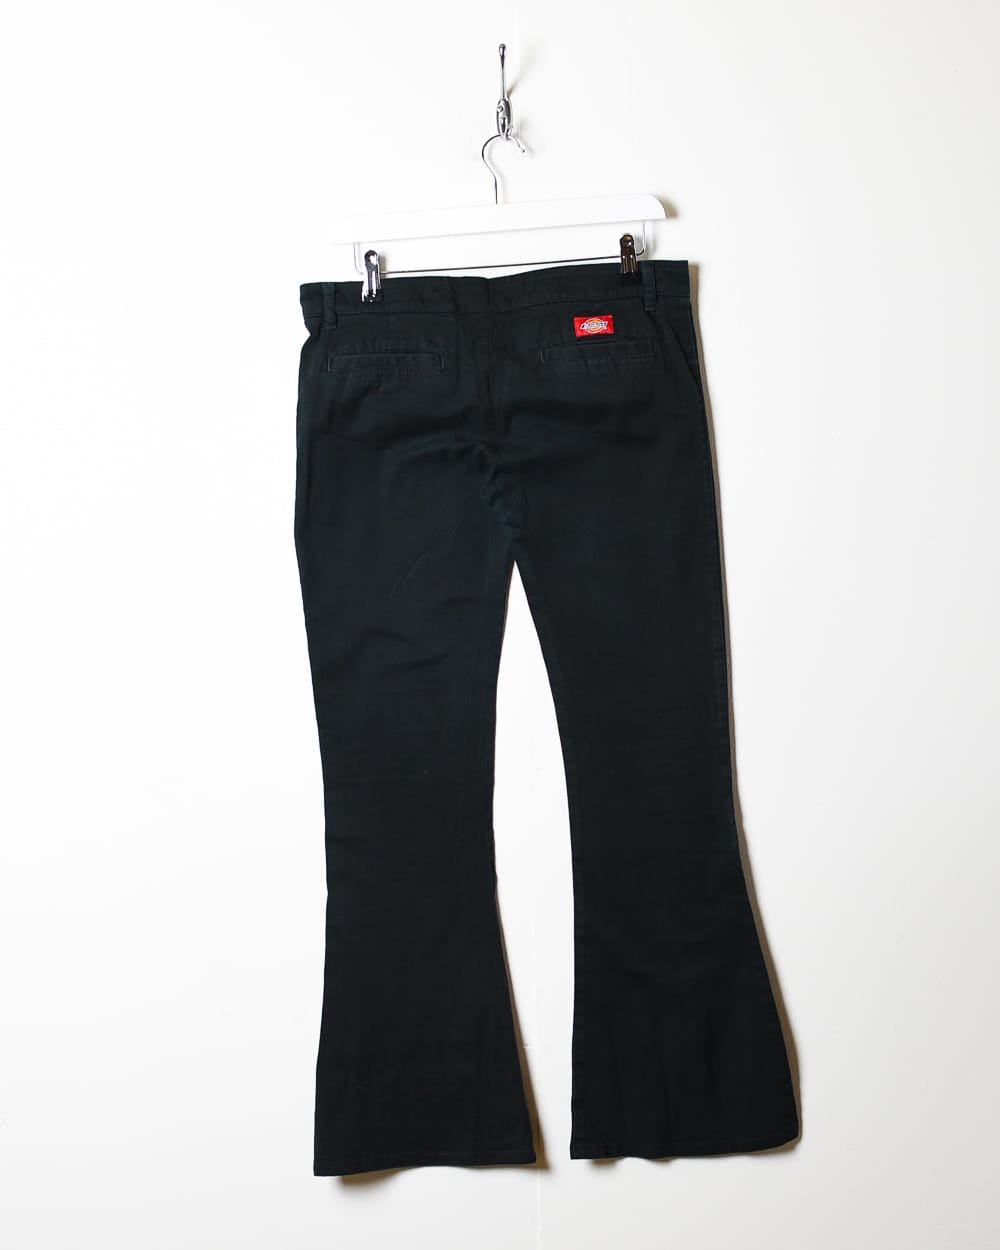 Black Dickies Trousers - W32 L30